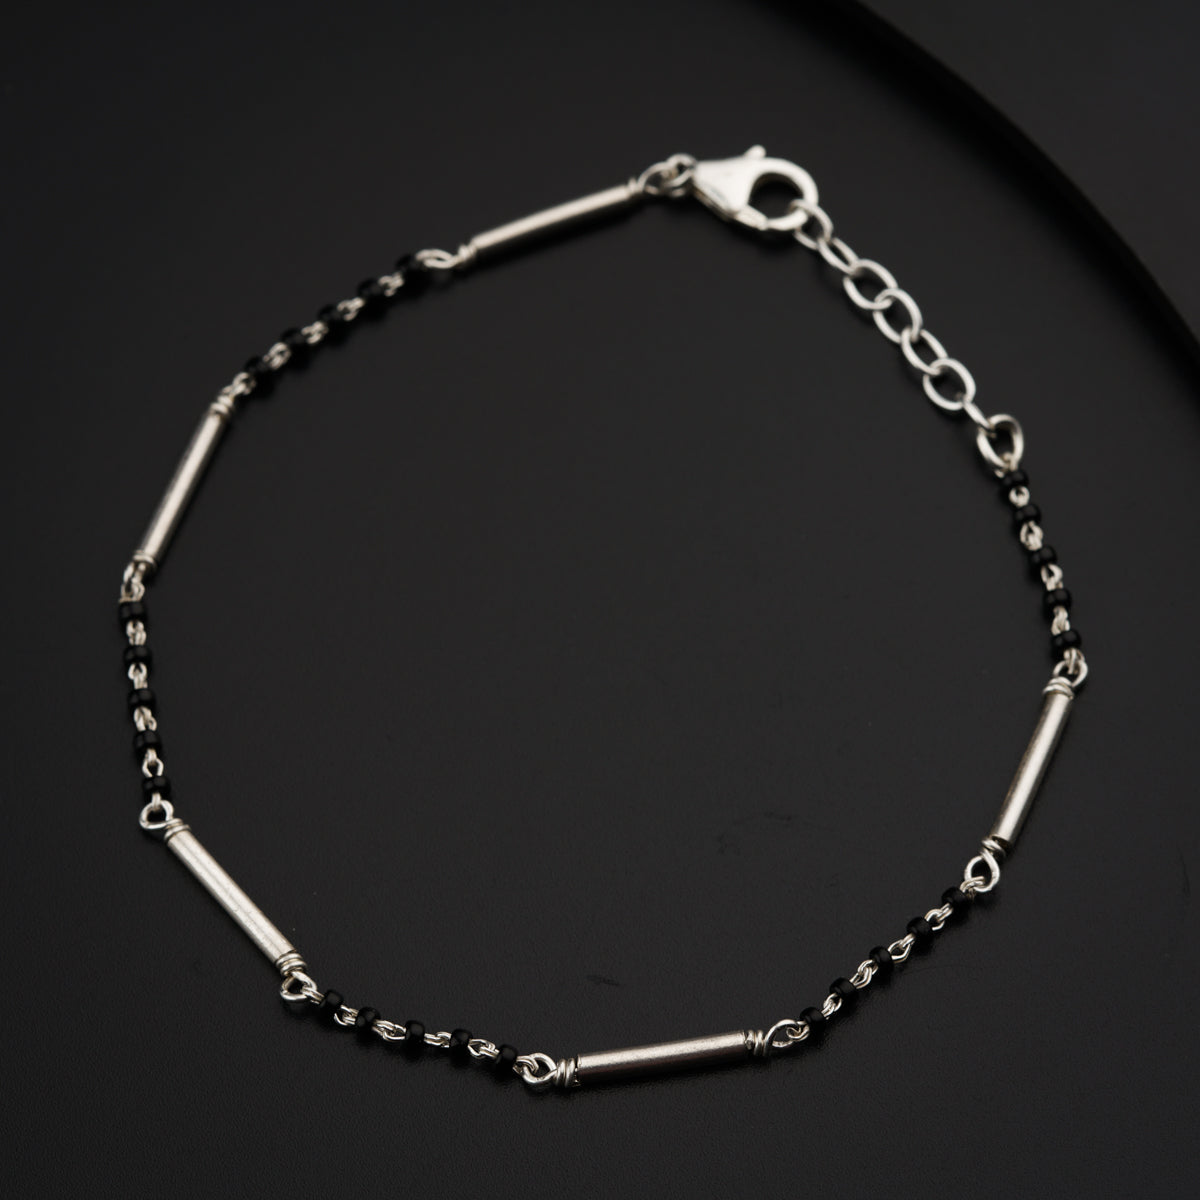 a black and silver bracelet on a black surface